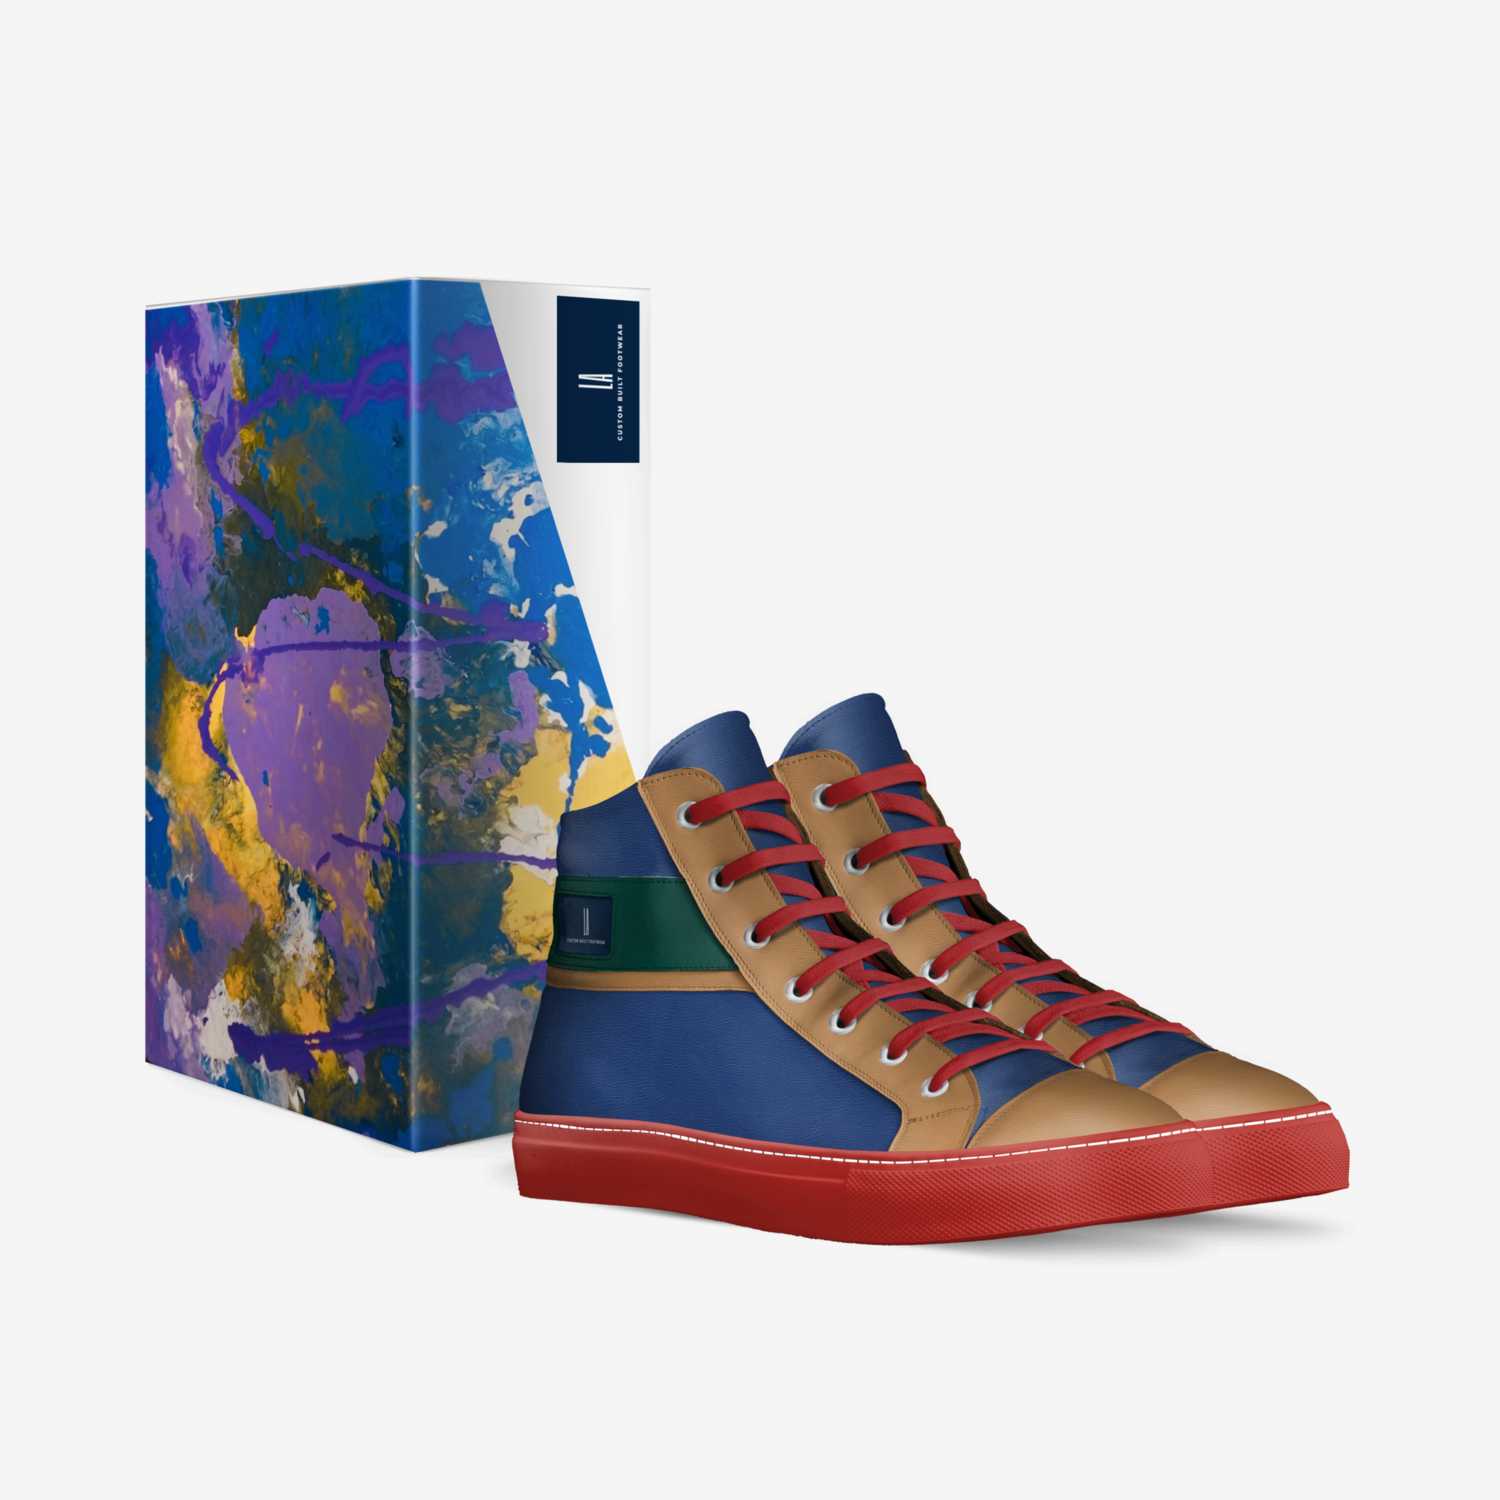 LA custom made in Italy shoes by Brandi Robinson | Box view